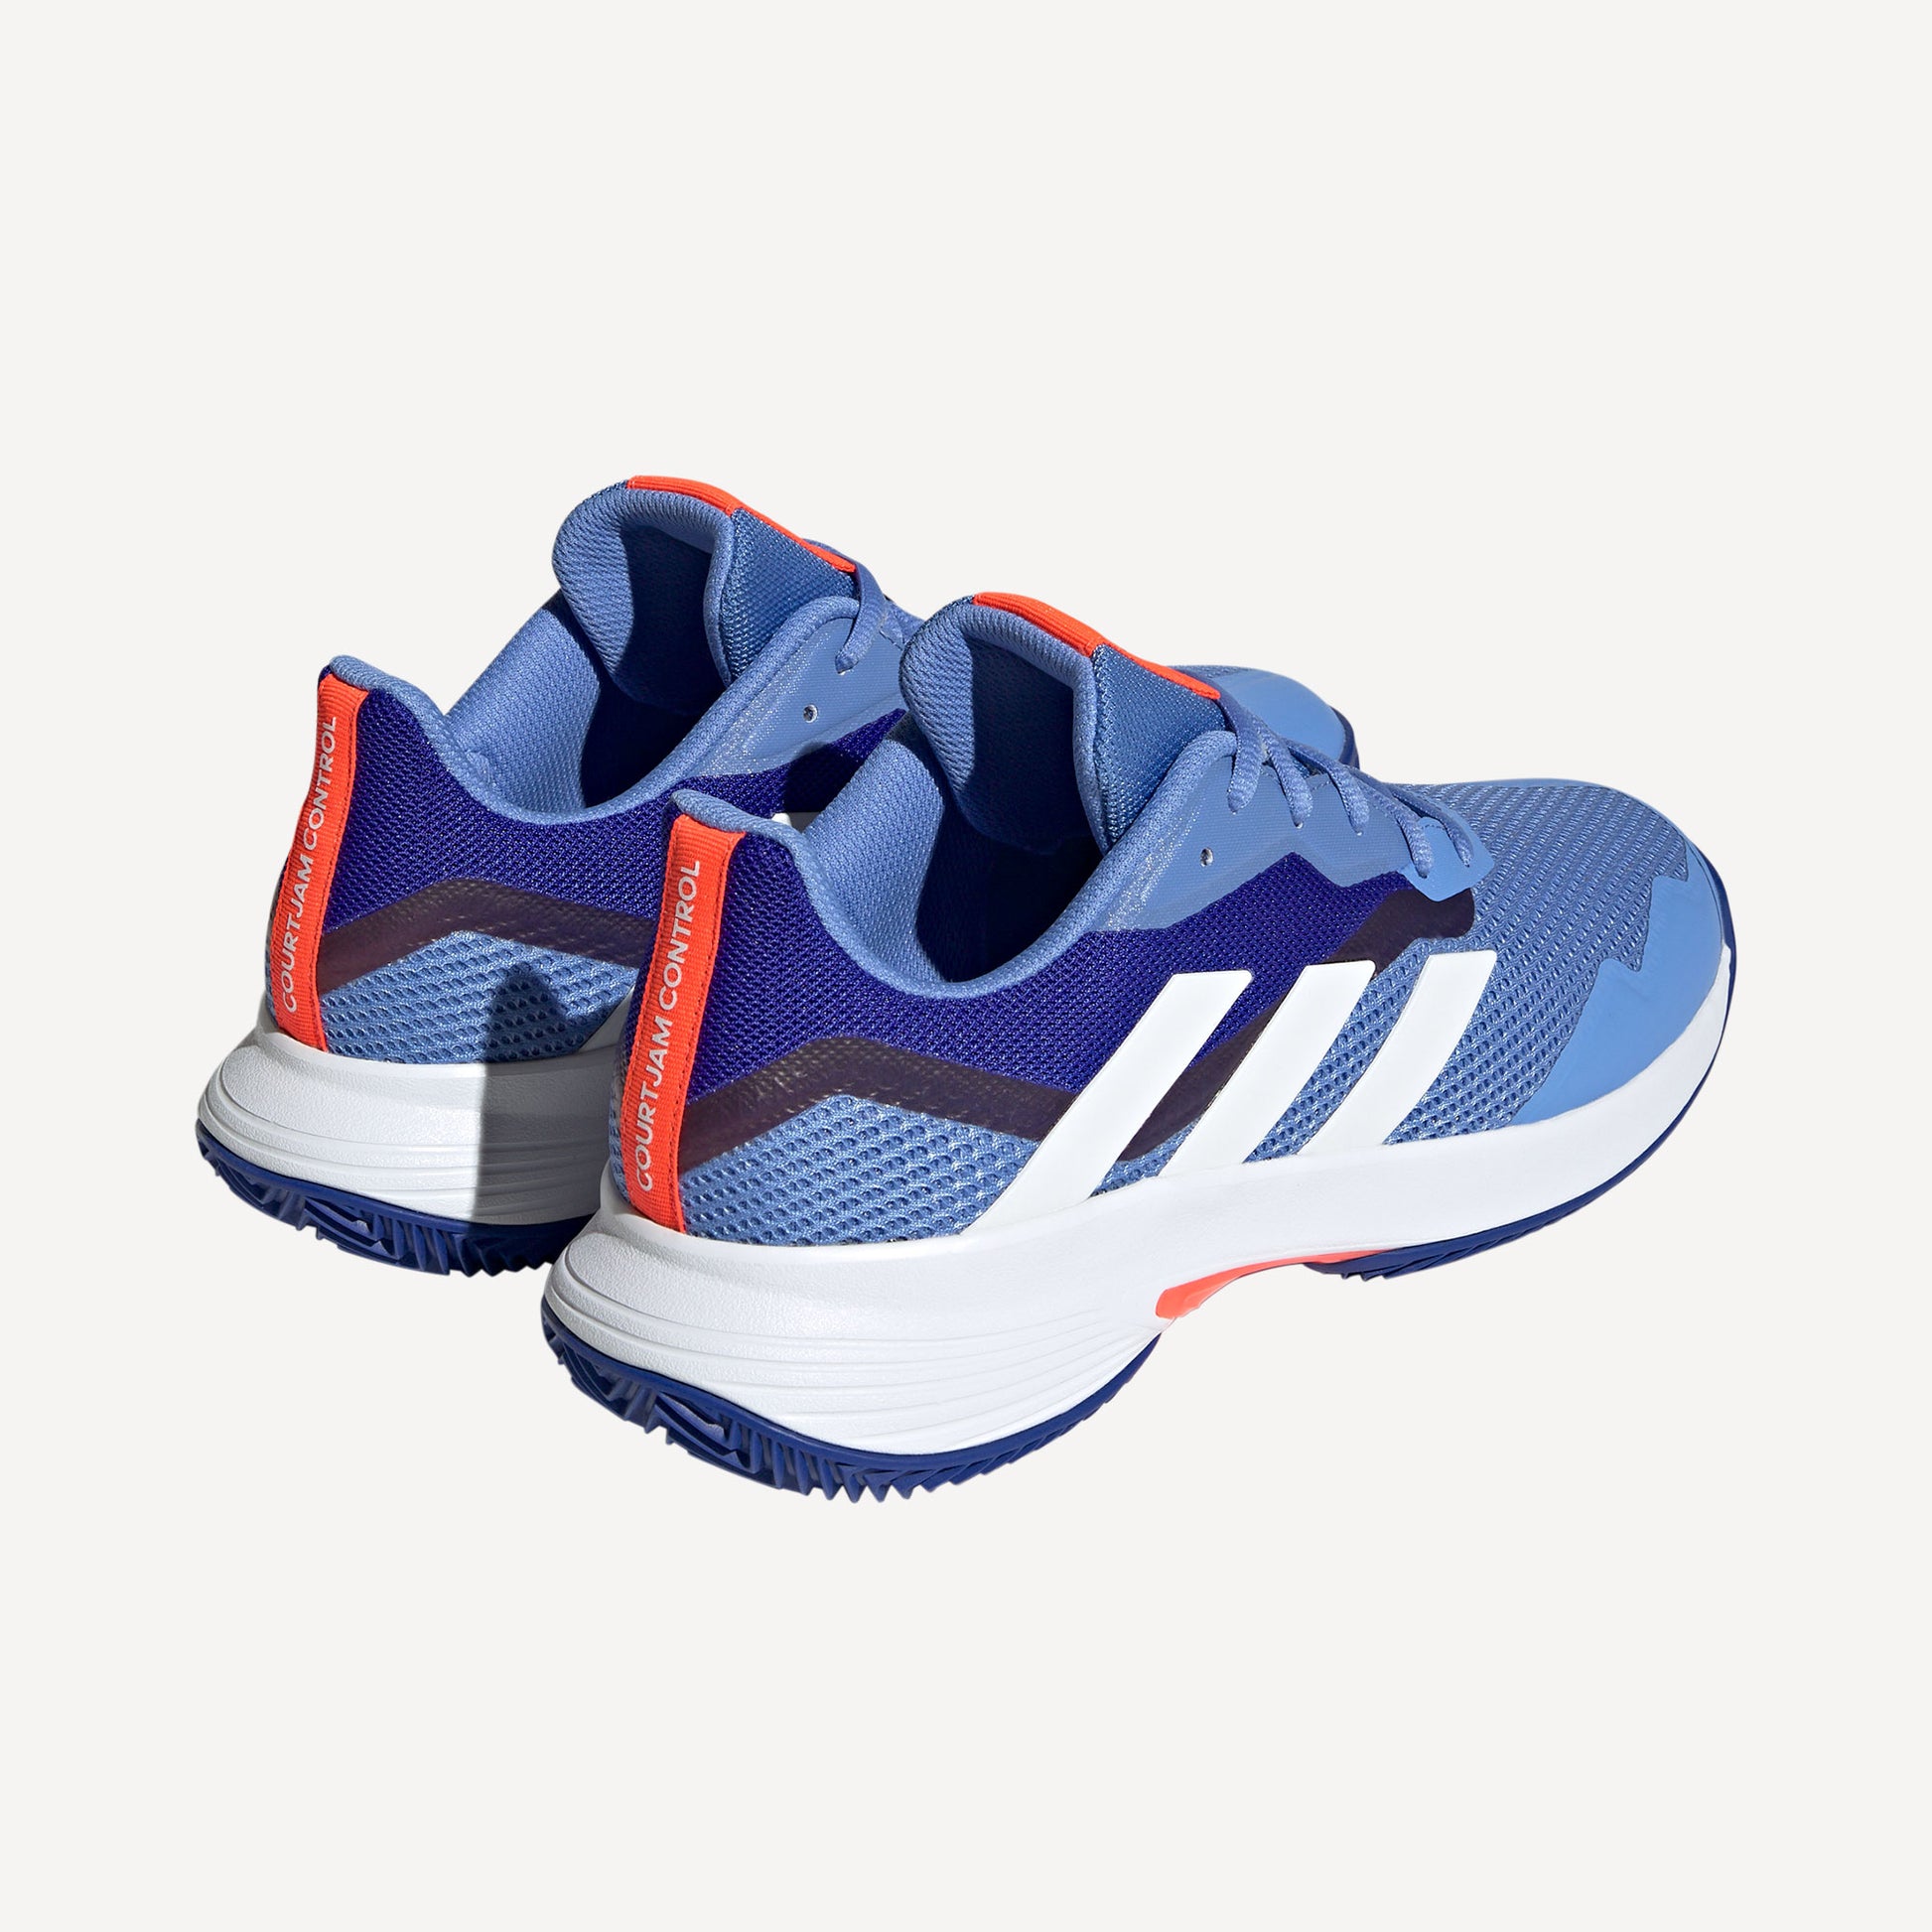 adidas CourtJam Control Men's Clay Court Tennis Shoes Blue (6)